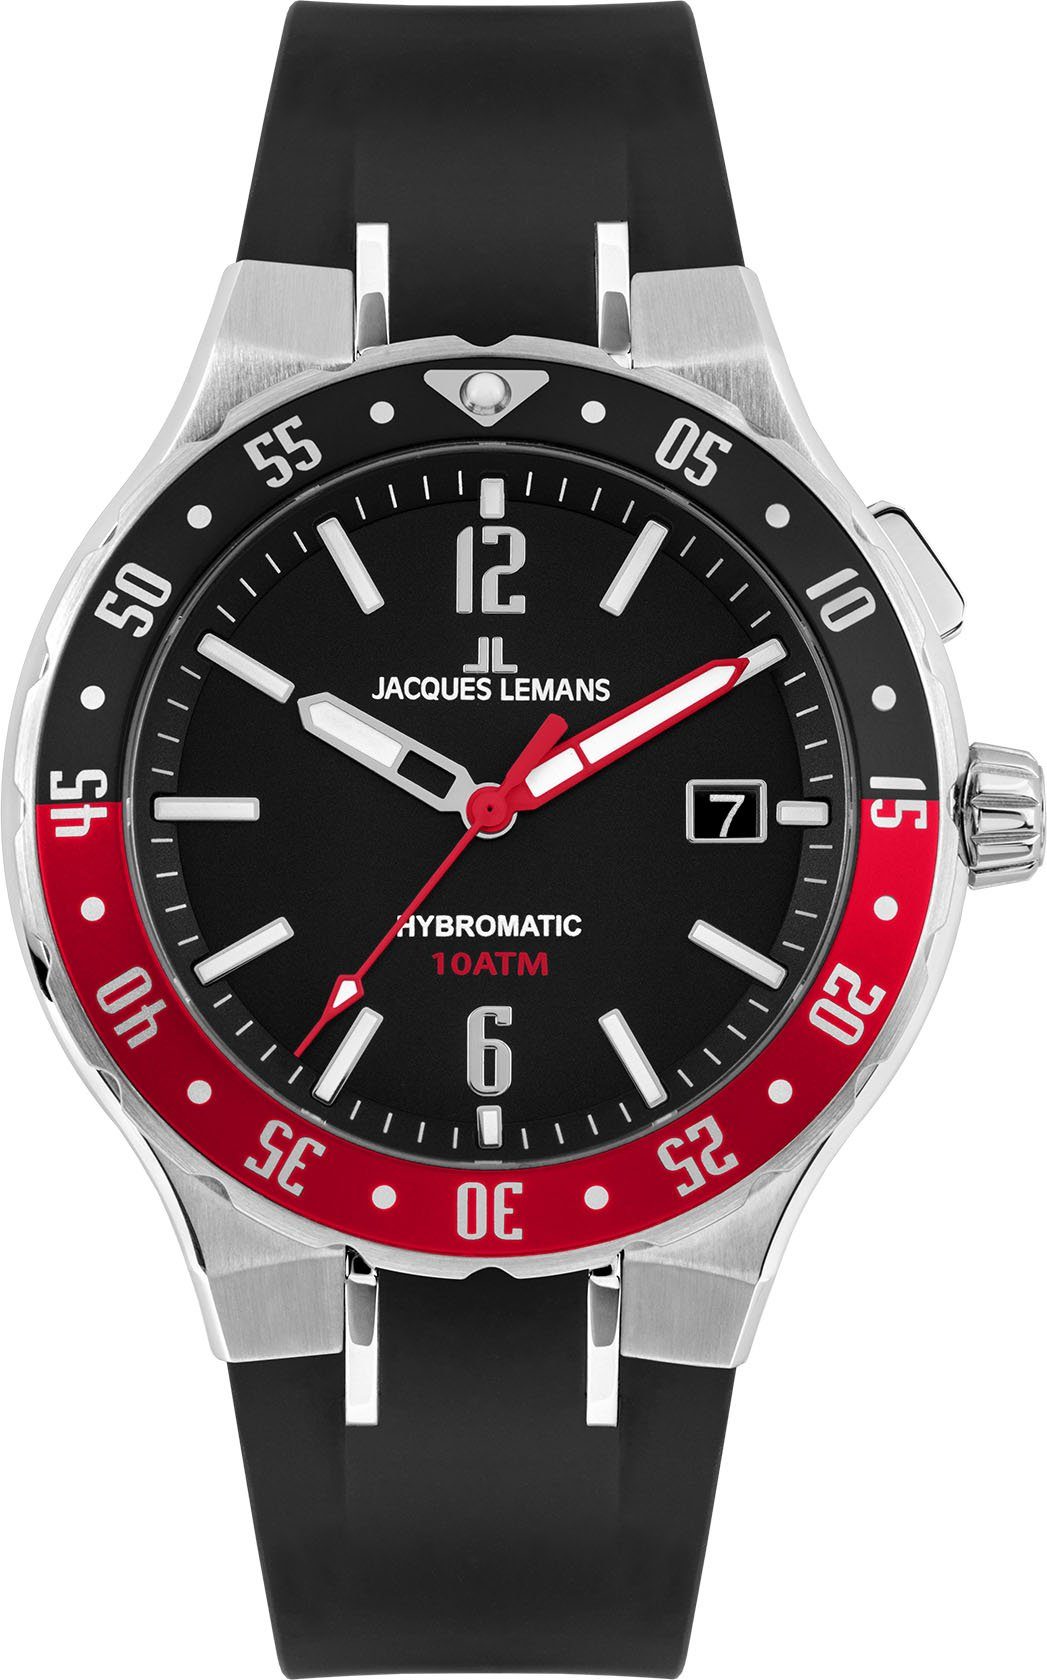 Jacques Lemans Kineticuhr Hybromatic, 1-2109A rot, schwarz | Armbanduhren